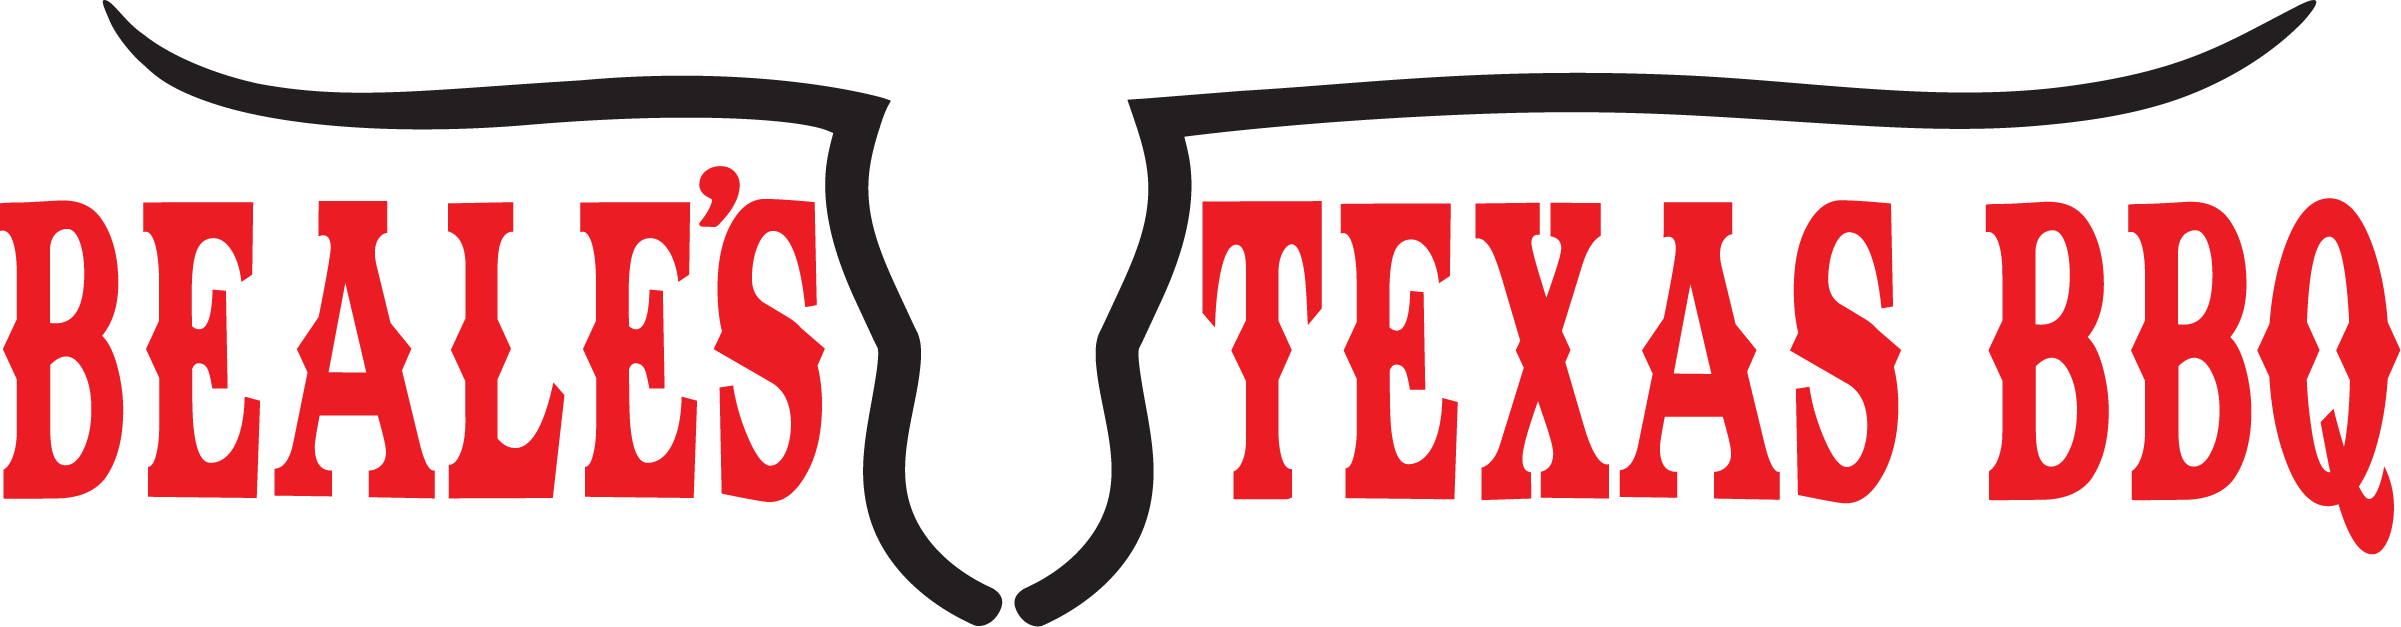 Beales Texas BBQ Peter's Landing